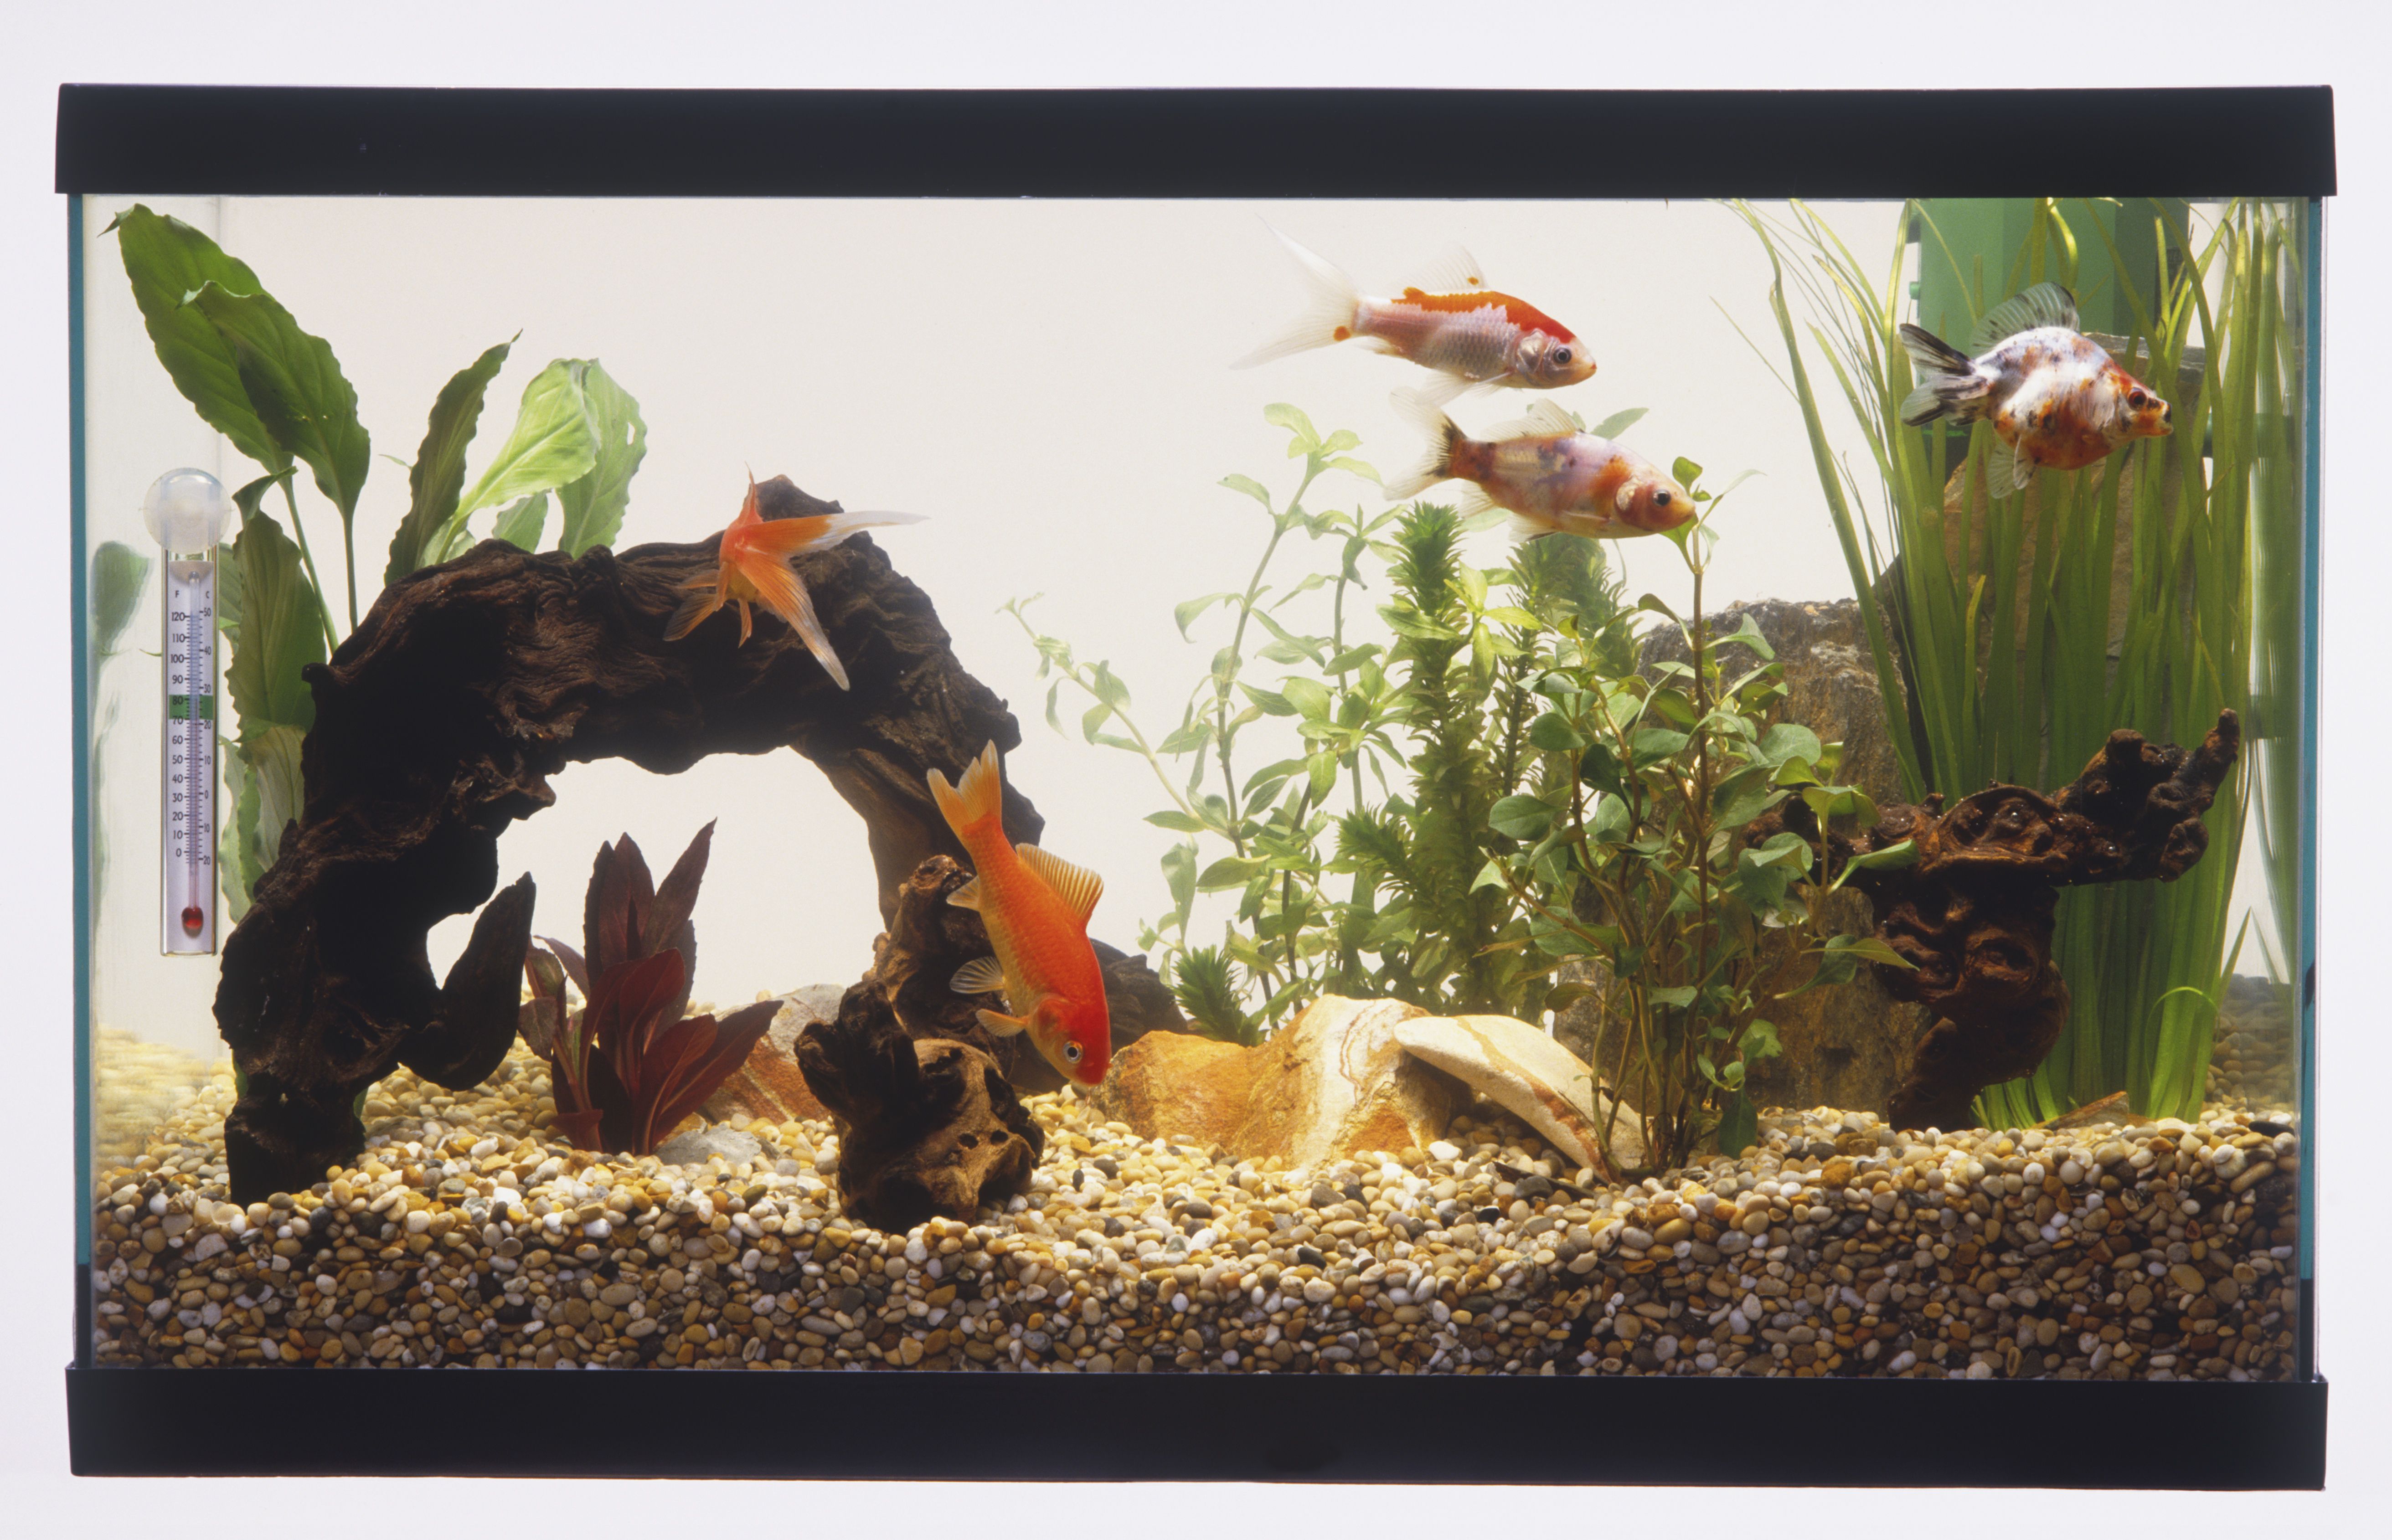 Fish tank with gravel, bridge, green plants and five goldfish (Carassius auratus)